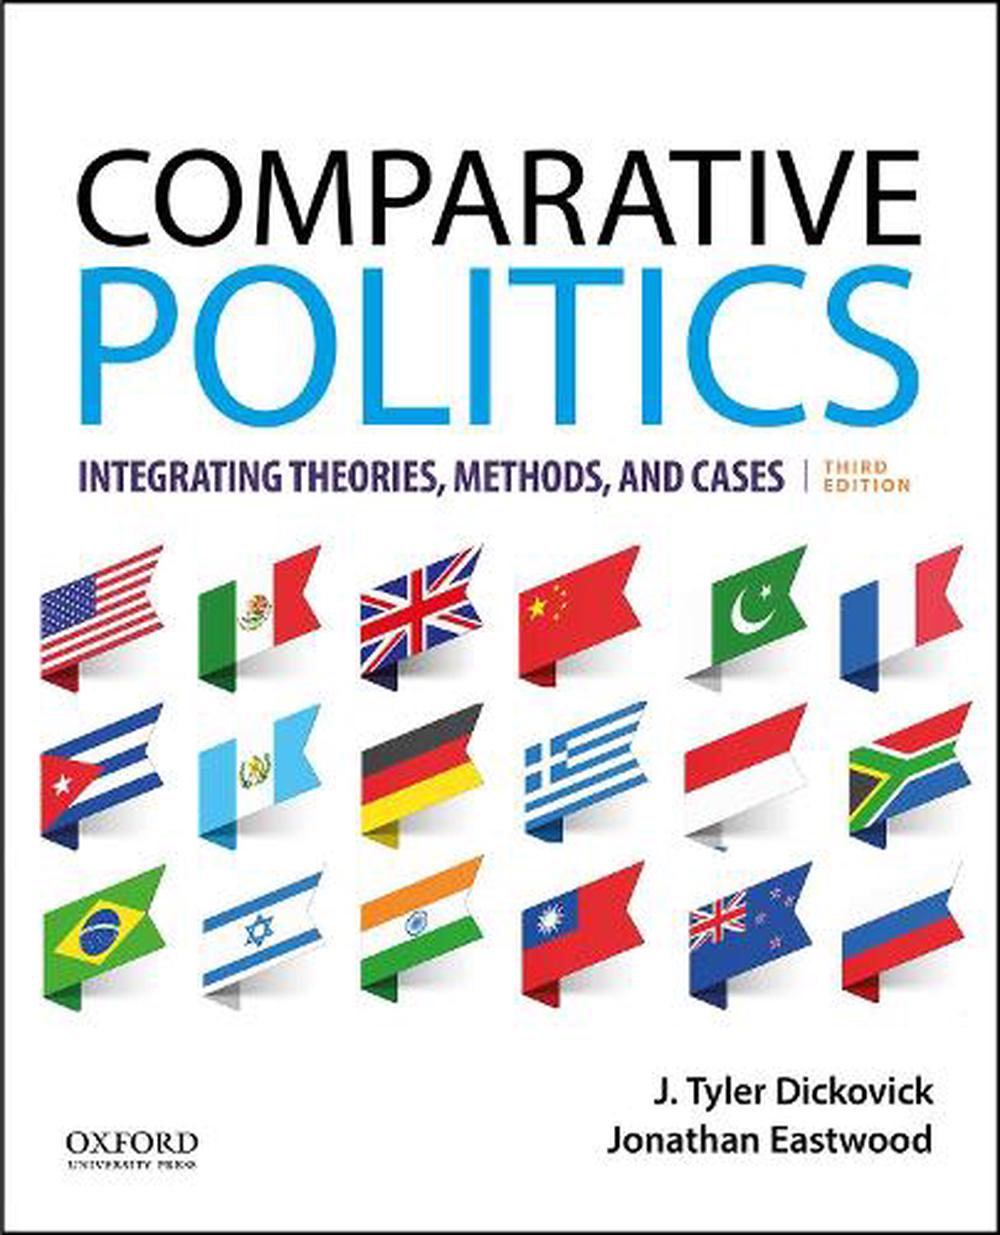 case study method in comparative politics